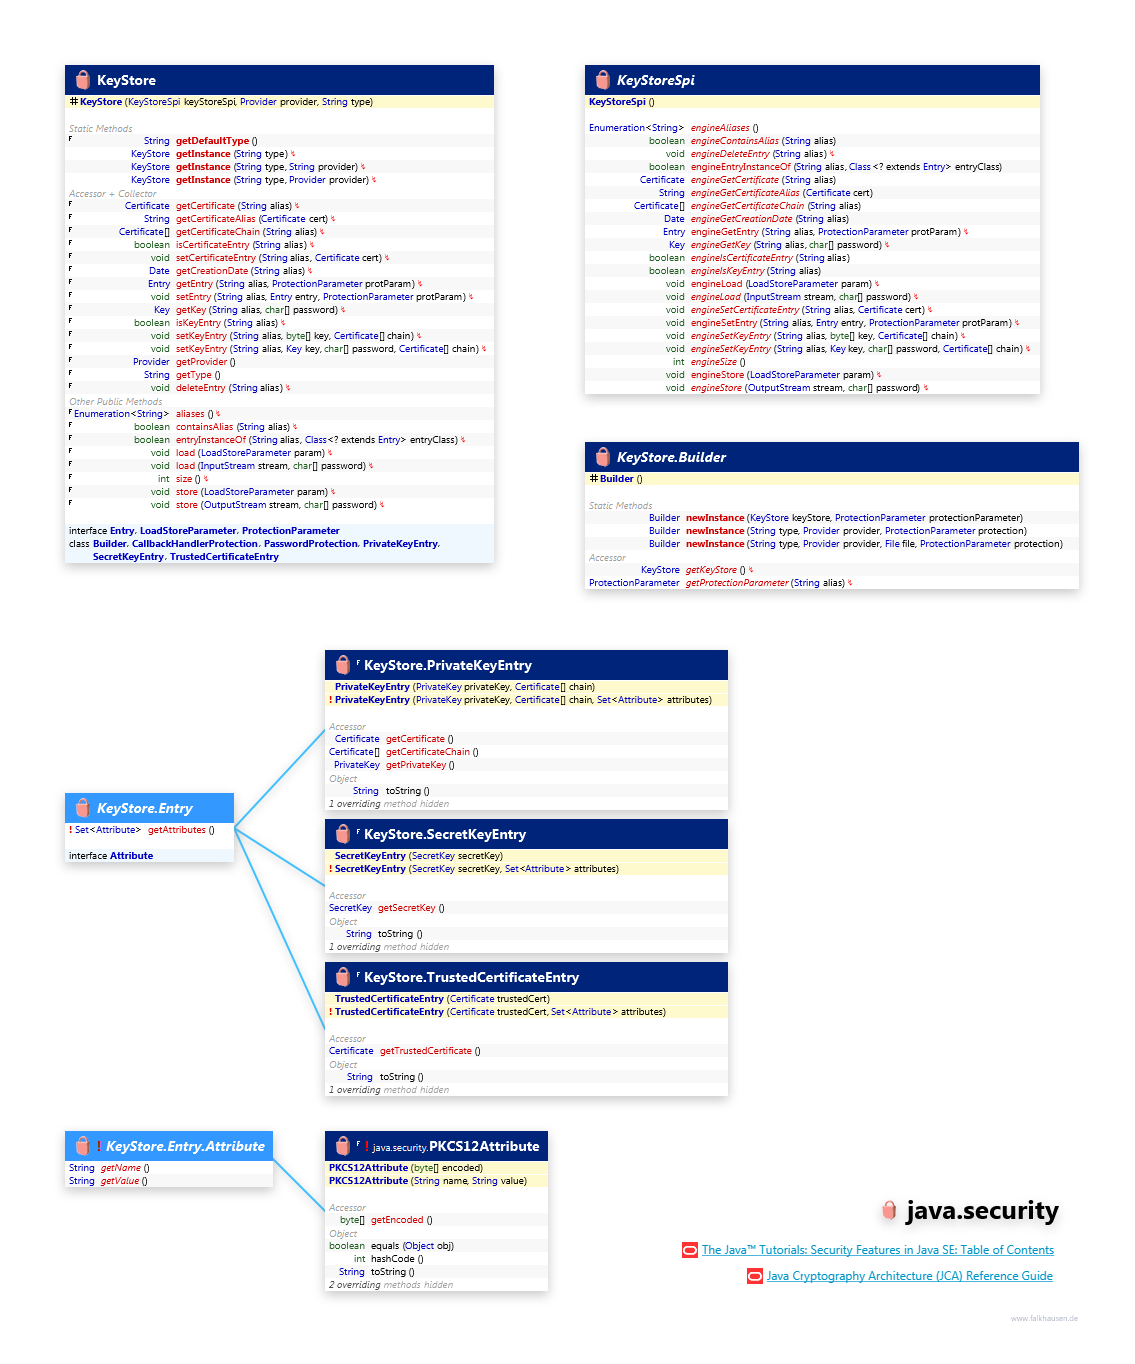 java.security KeyStore class diagram and api documentation for Java 8